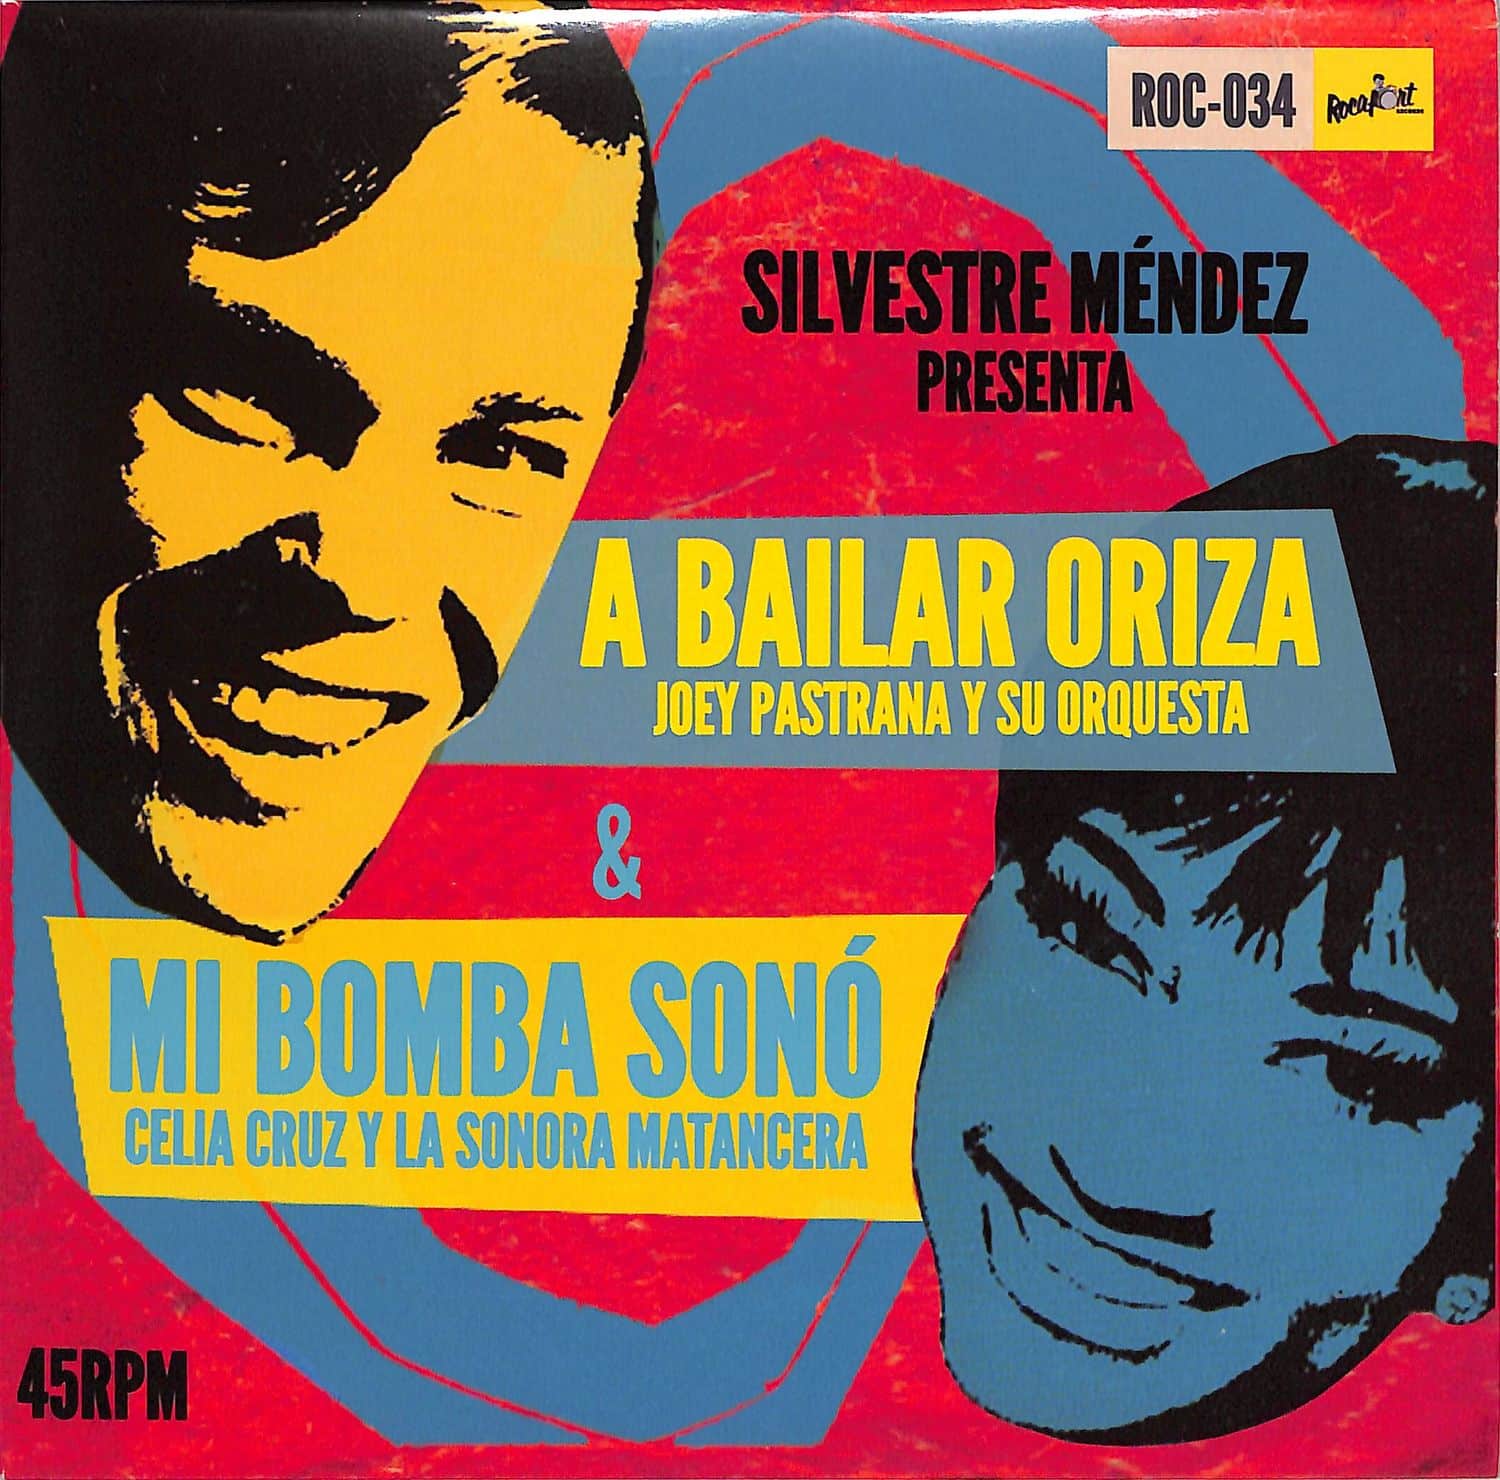 Celia Cruz con la Sonora Matancera & Joey Pastrana - MI BOMBA SONO / A BAILAR ORIZA 